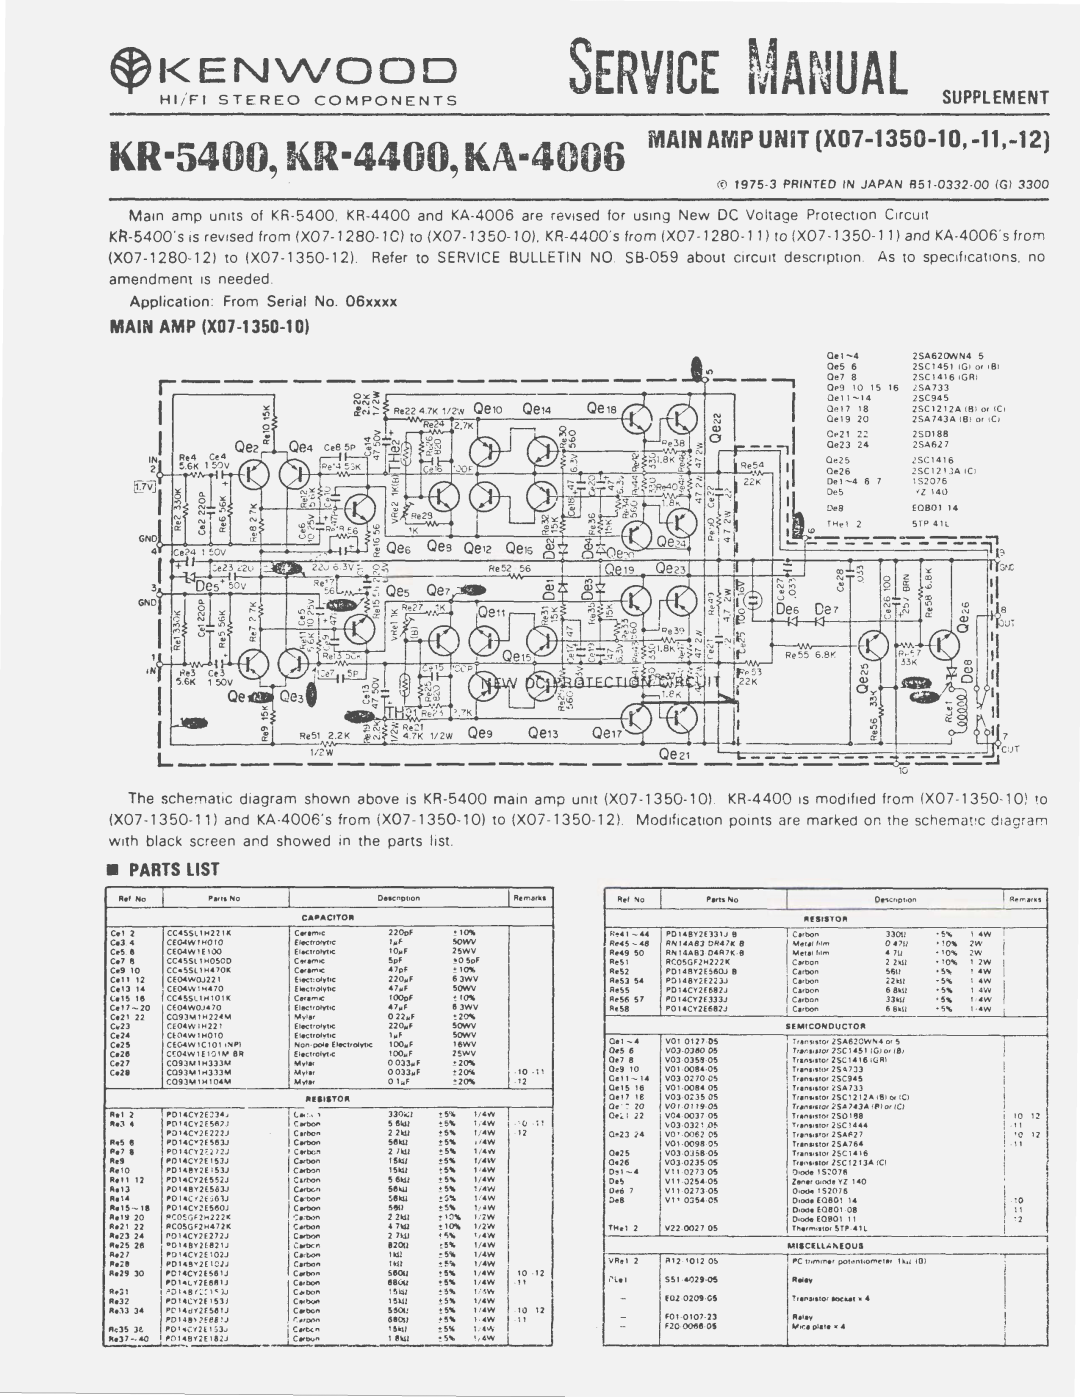 Kenwood KR4400, KR5400, KA4006 specifications Oe1s, ~I ENV\1000, c..o.n, 1/4W, MAIN AMP XOJ-1350-10, Parts List 